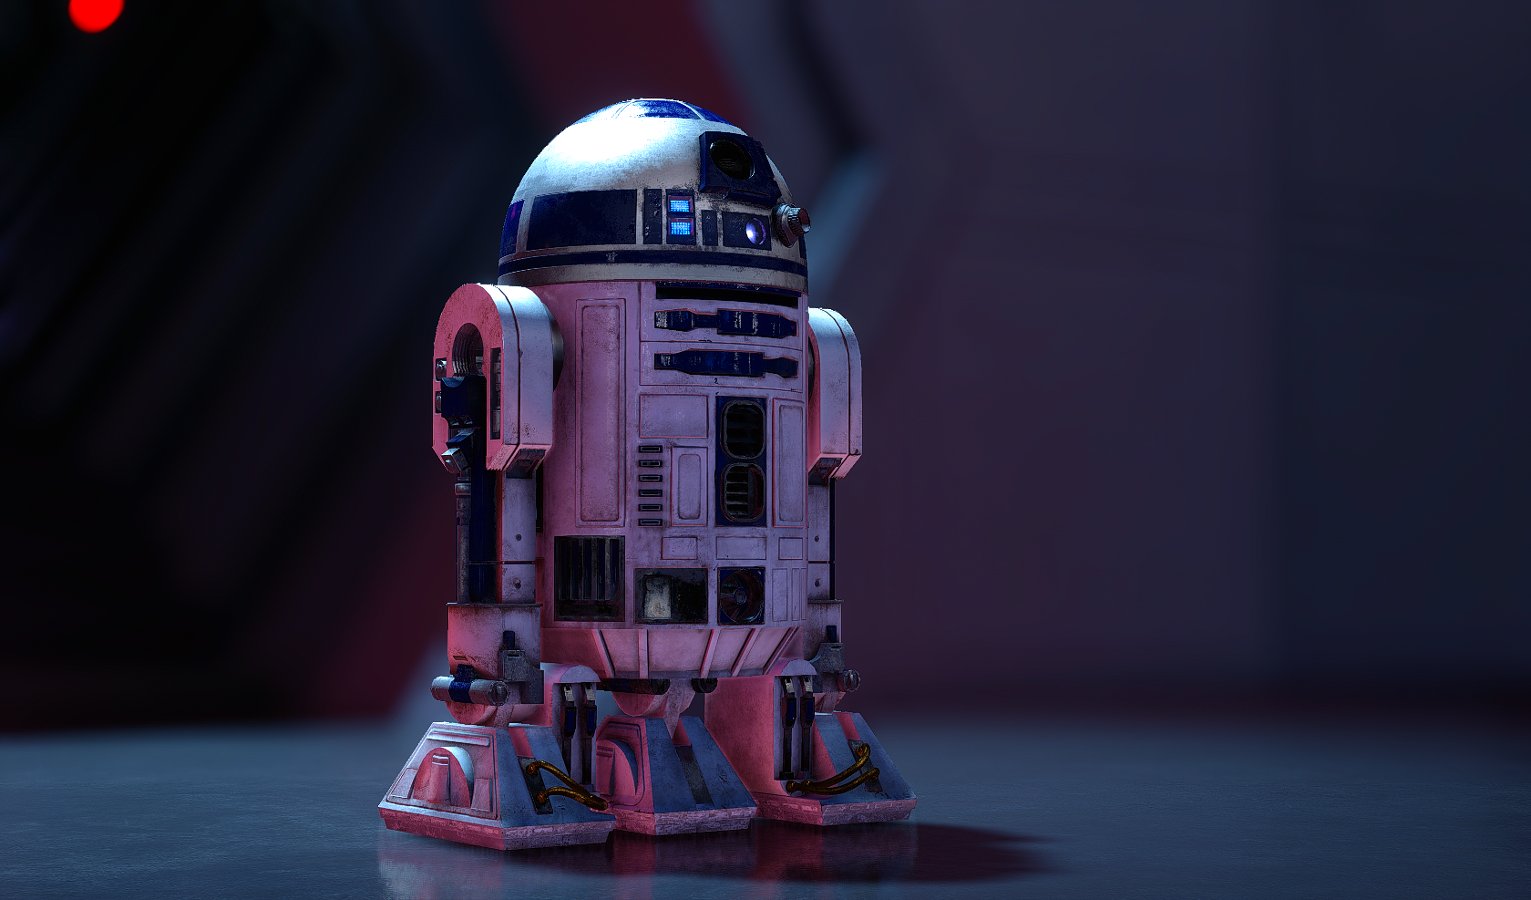 R2-D2 on the Death Star. Image taken by Battlefront Captures.